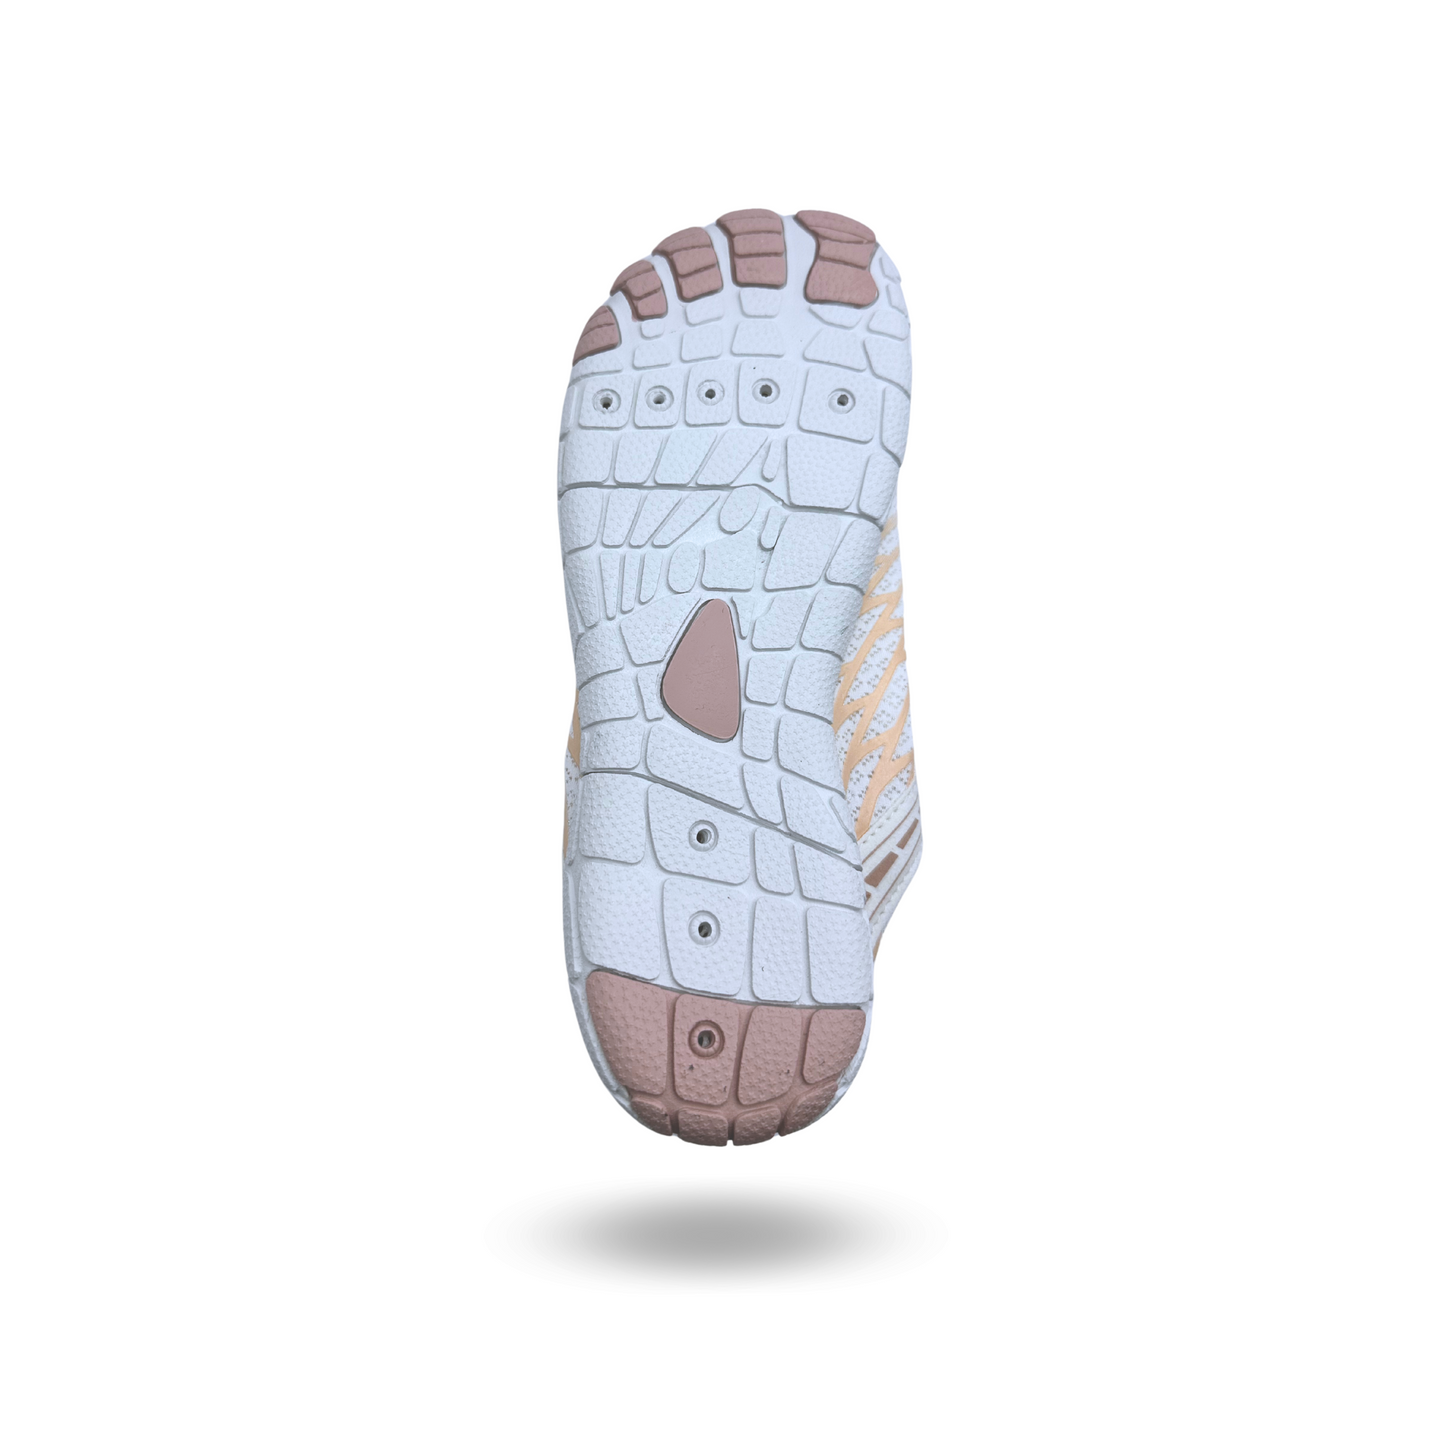 Zapato acuático modelo - Blubber -